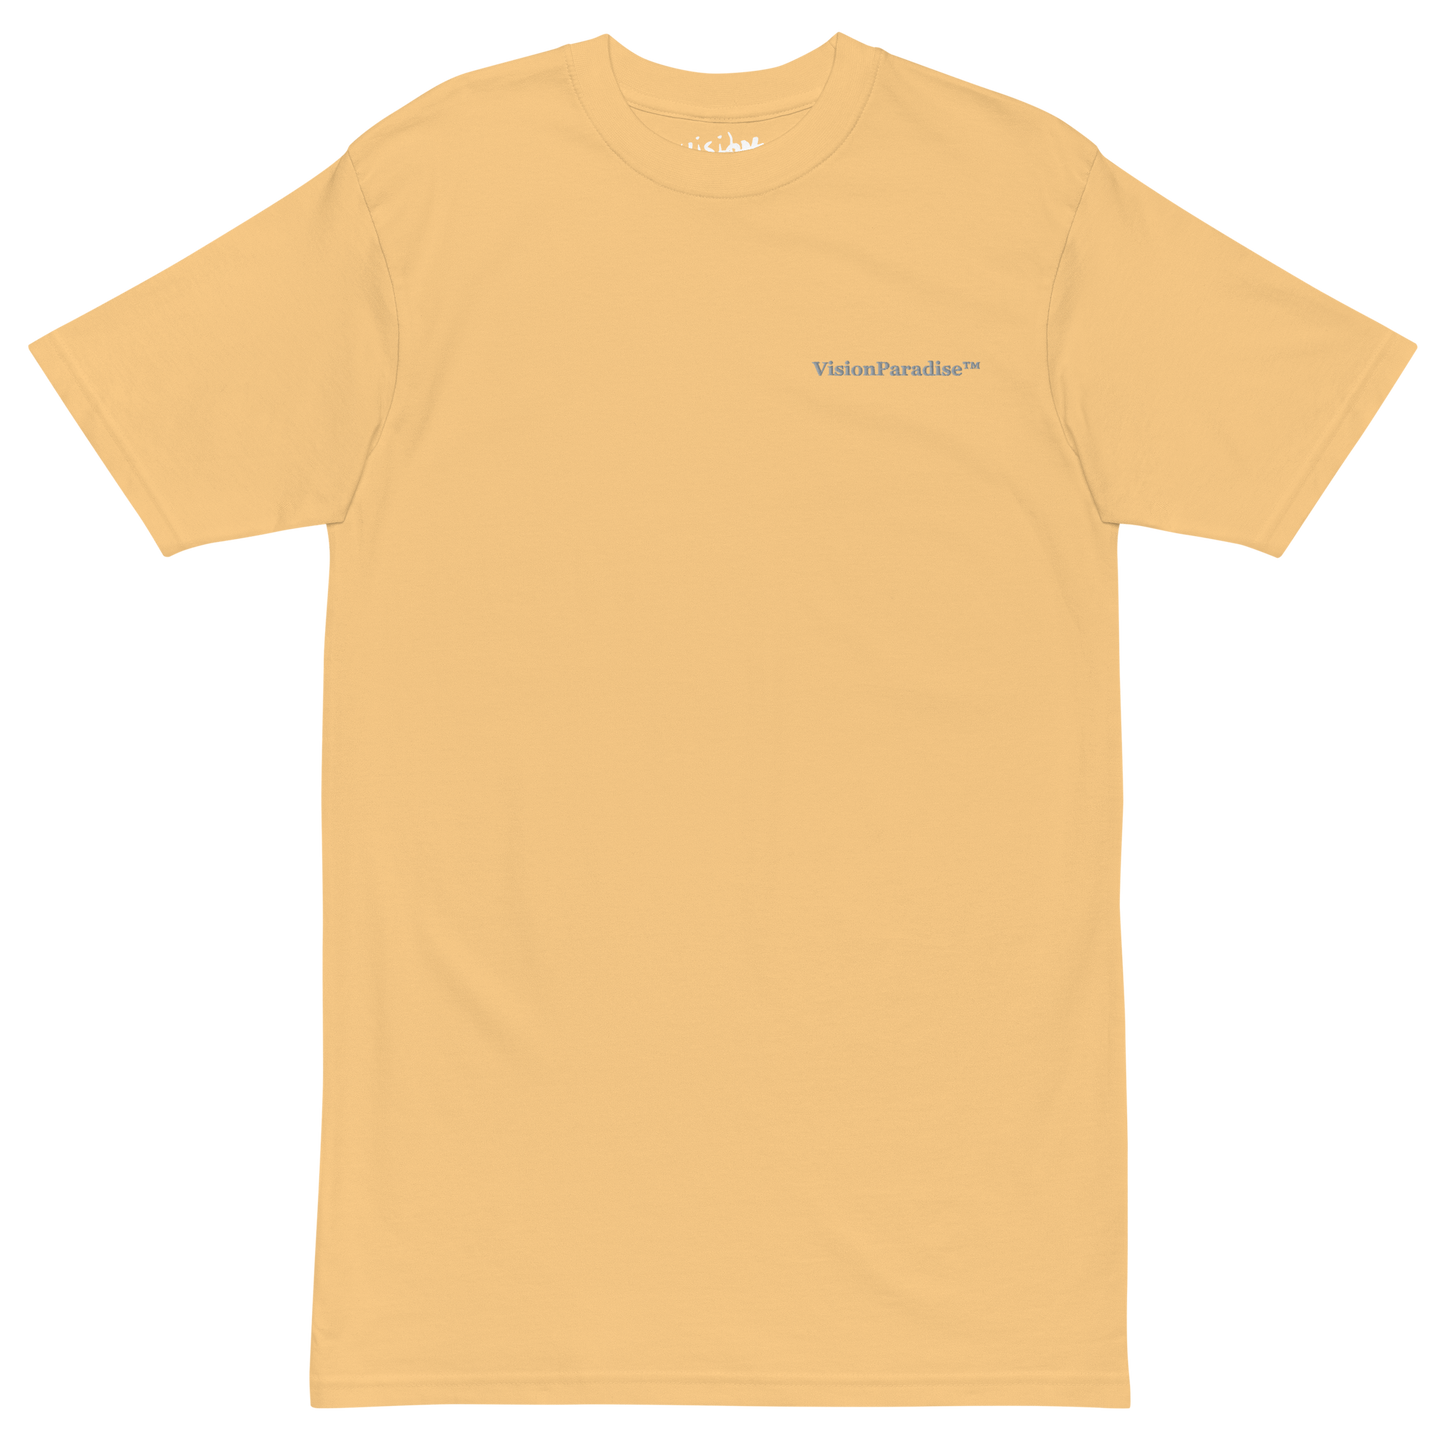 over-sized vp shirt